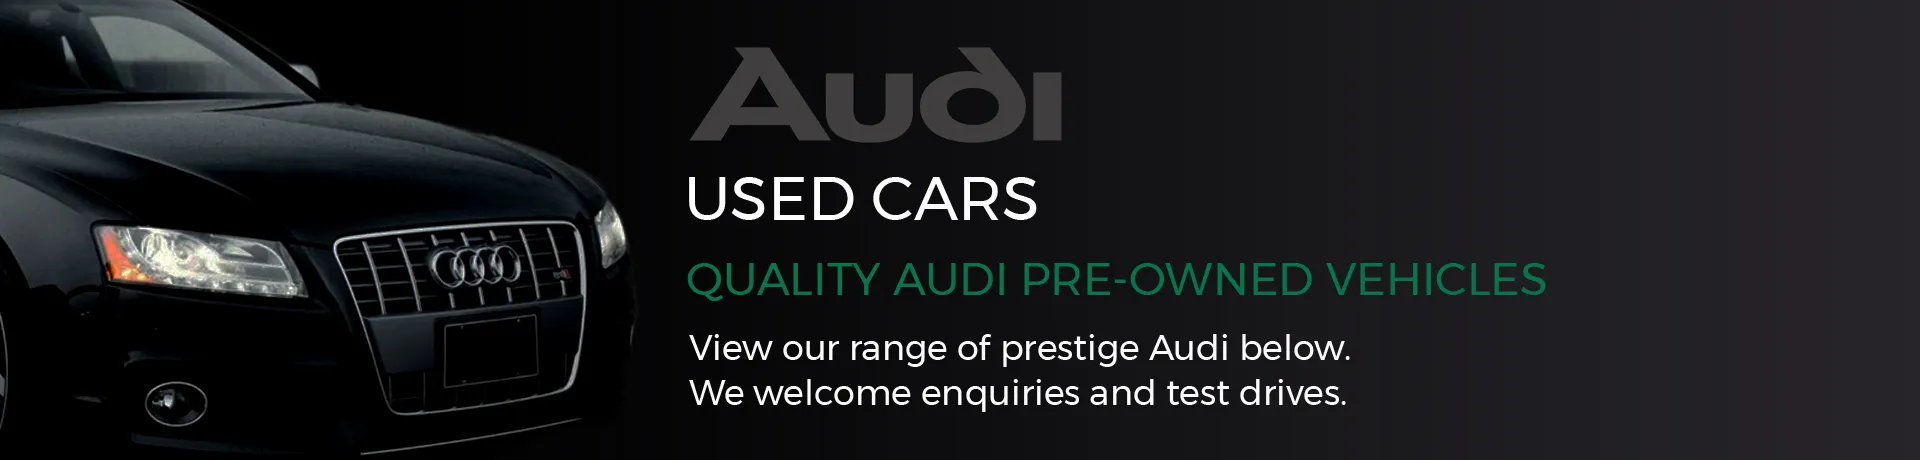 Audi Used Cars Adelaide